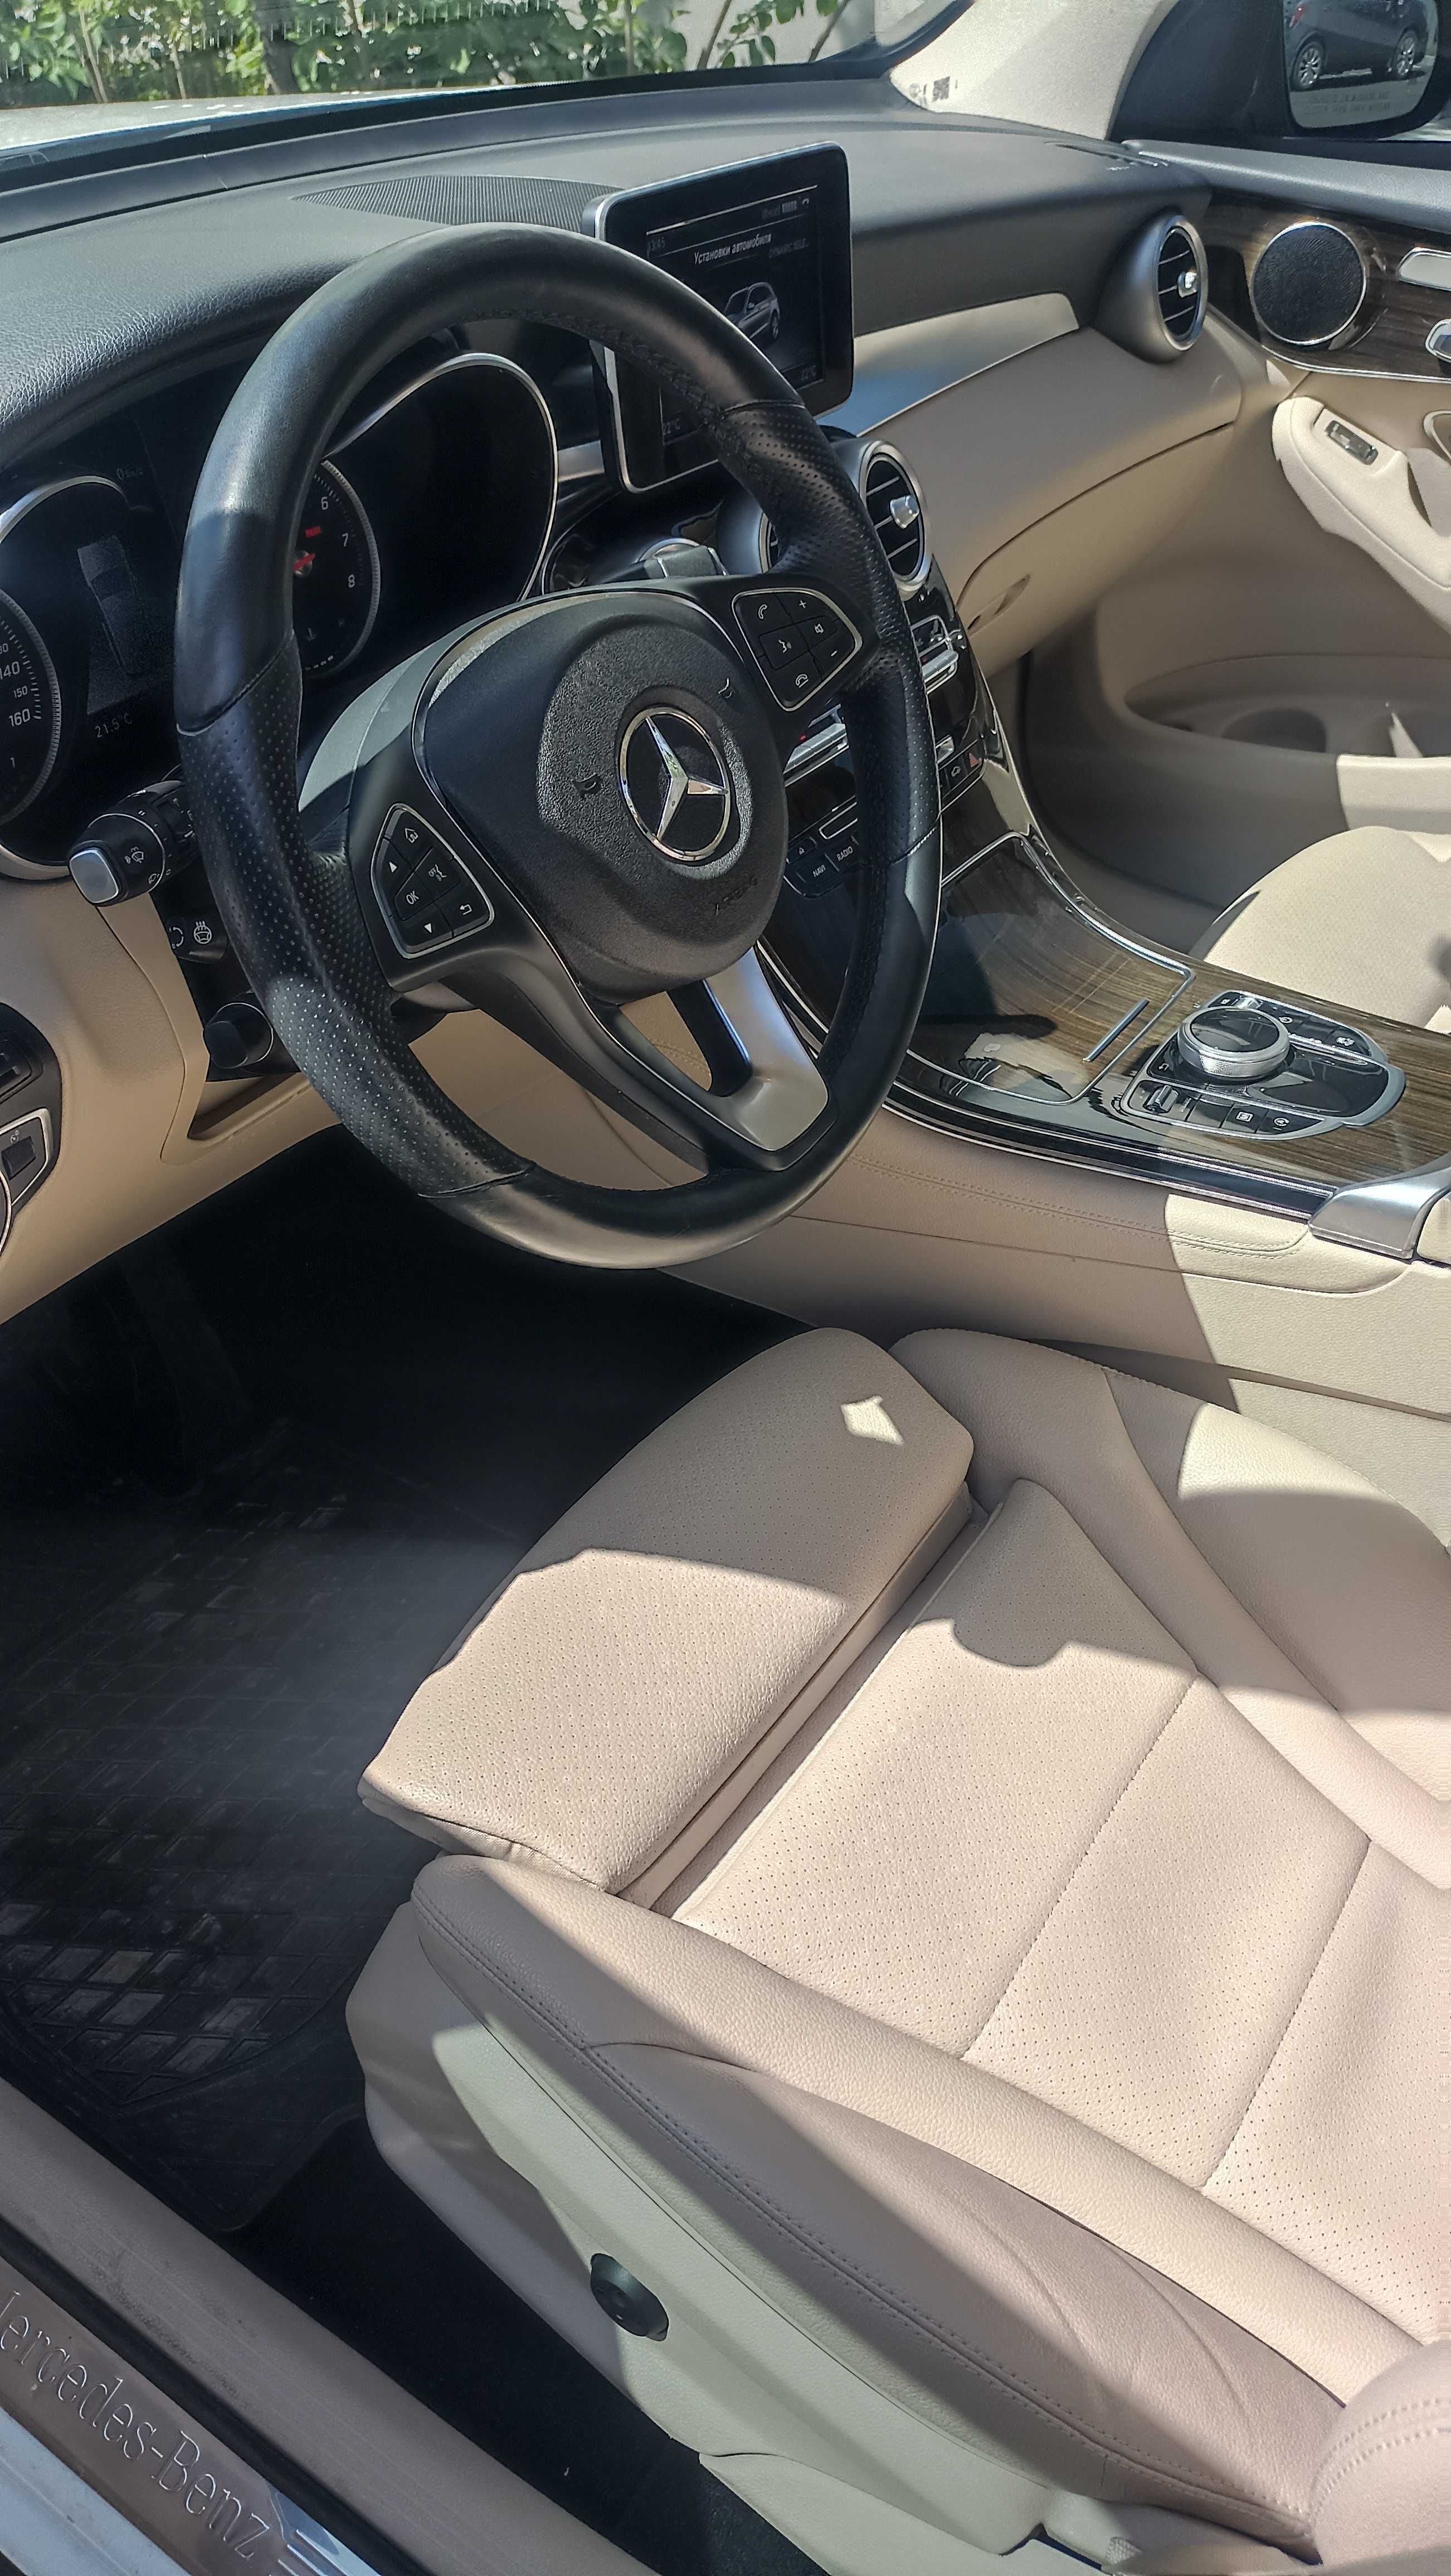 Mercedes GLC 2018 4matic